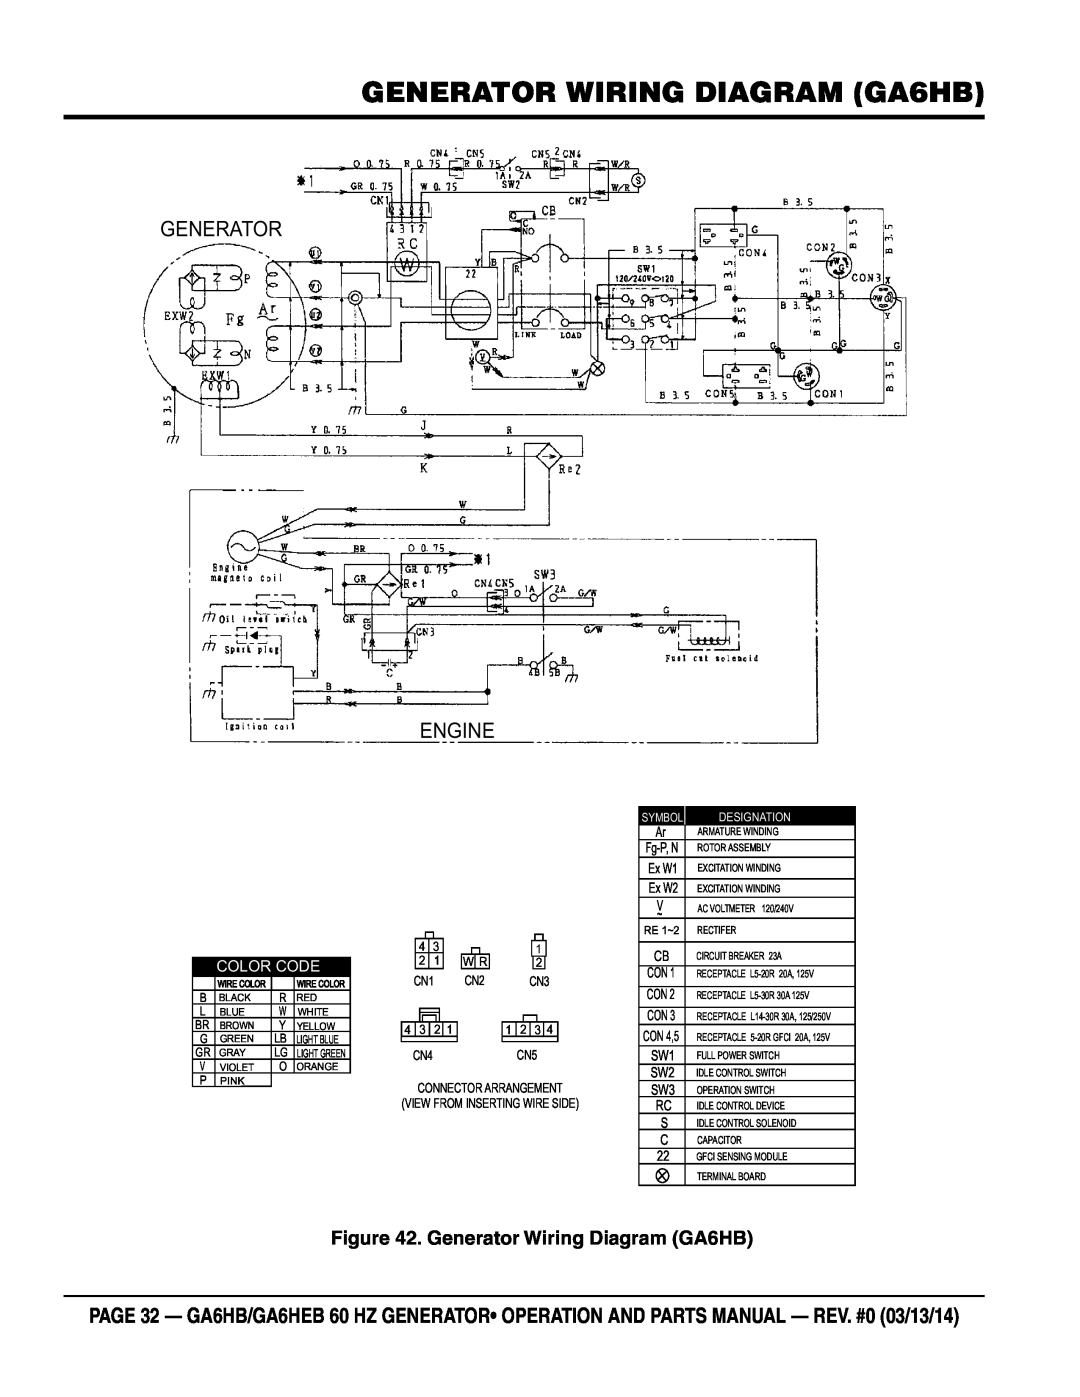 Multiquip ga6HEB generator wiring diagram ga6hb, Generator Engine, Generator Wiring Diagram GA6HB, Color Code, Symbol 